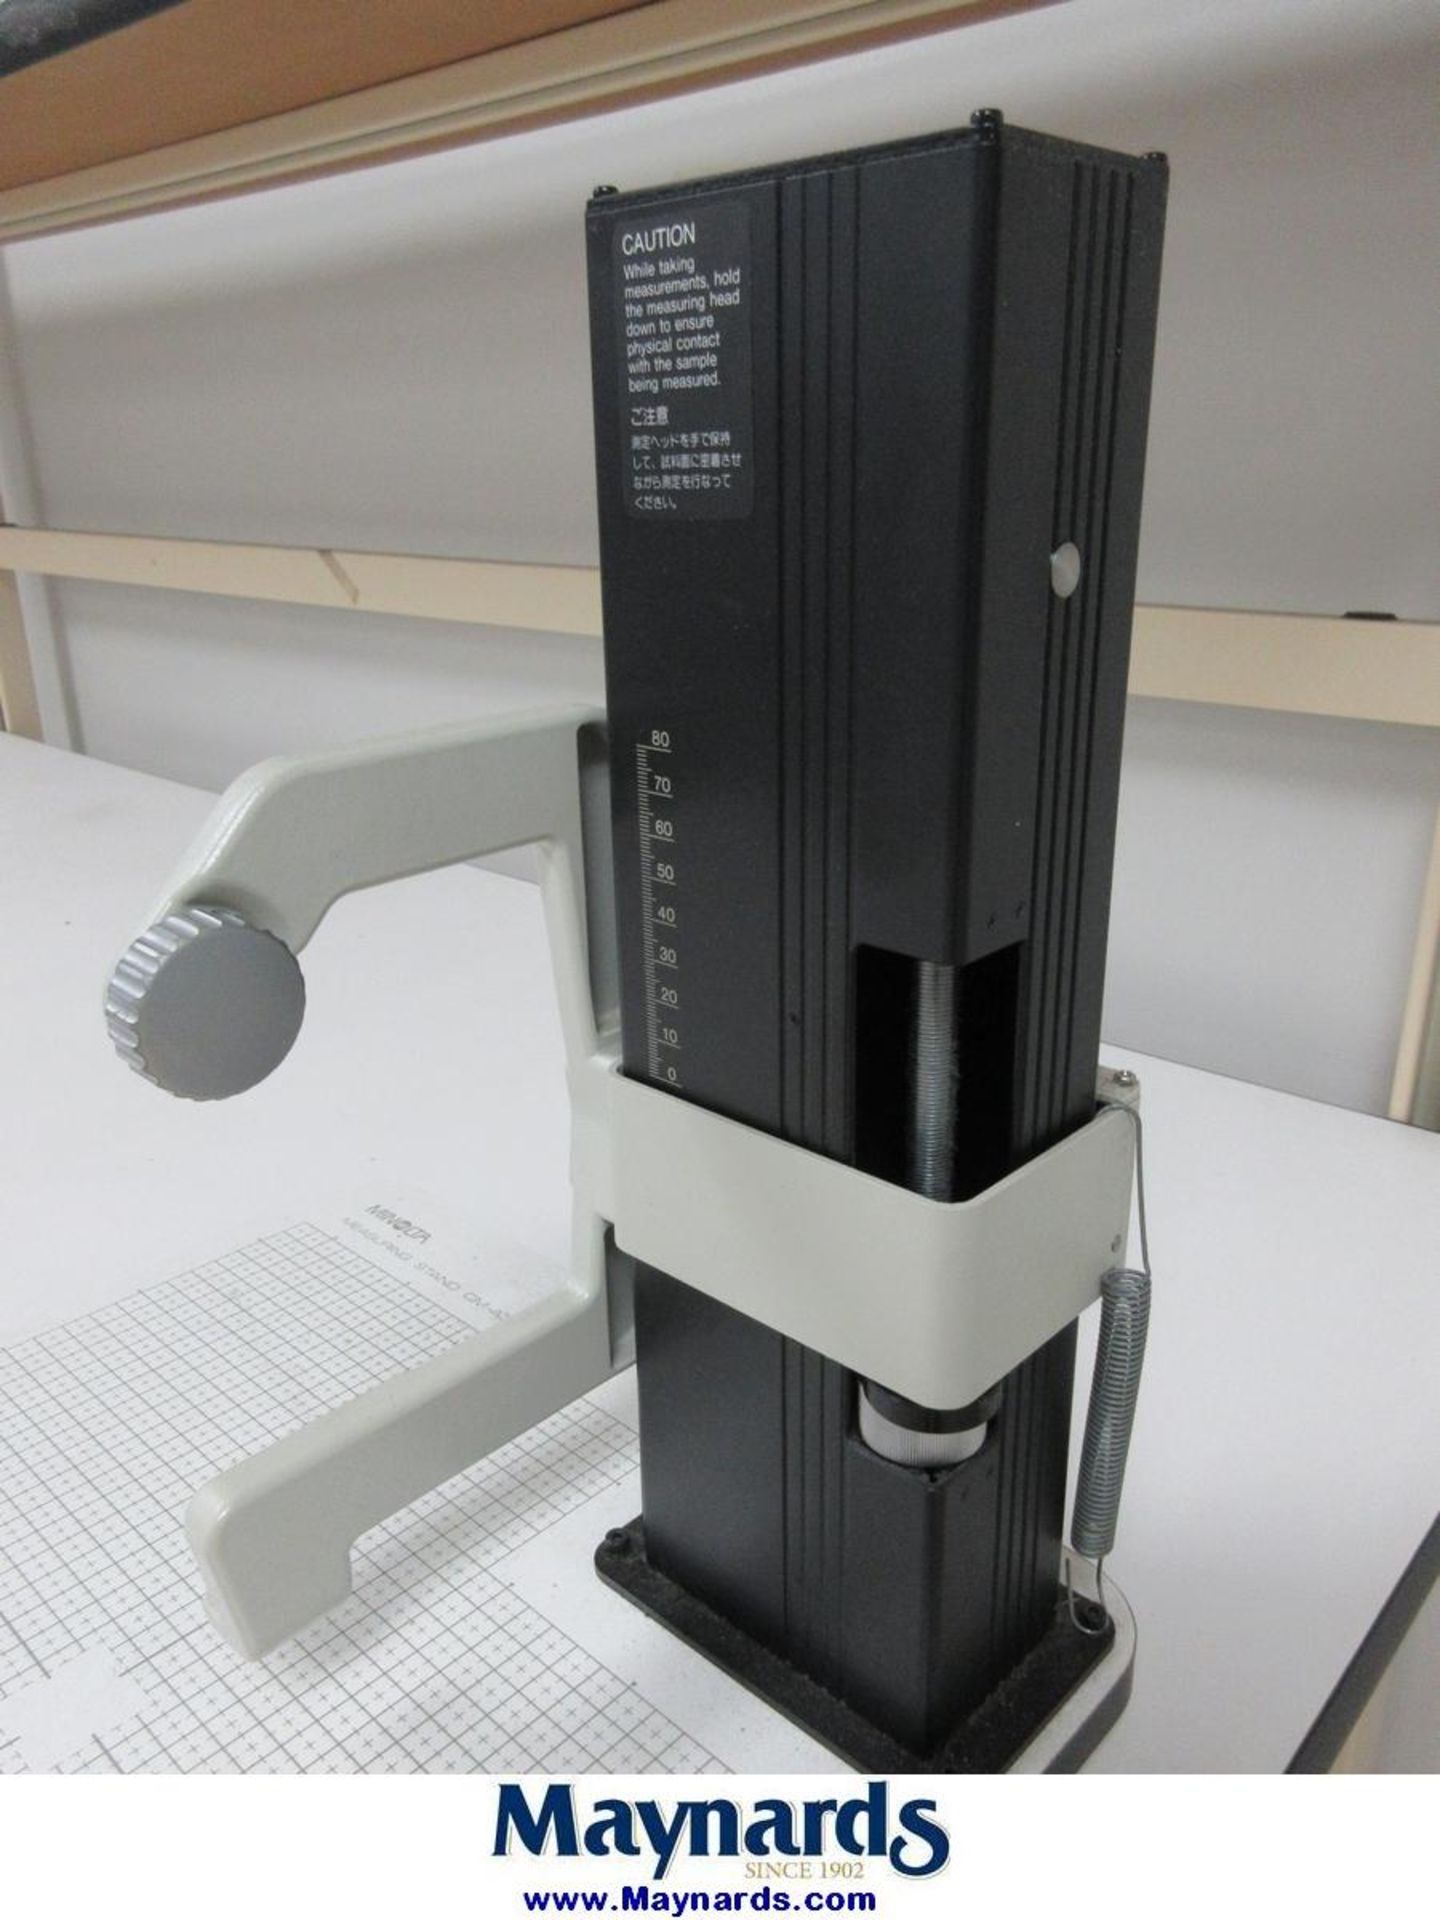 Minolta CM-A30 Measuring Stand - Image 3 of 4